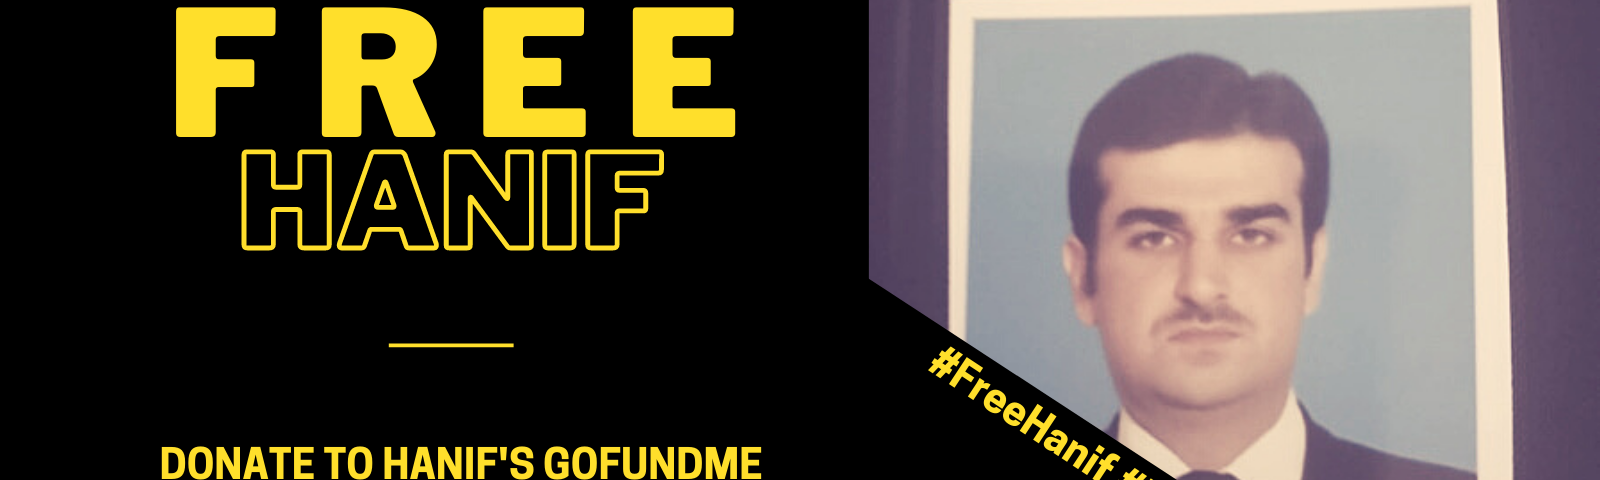 Free Hanif. Donate to Hanif’s gofundme: bit.ly/FreeHanif